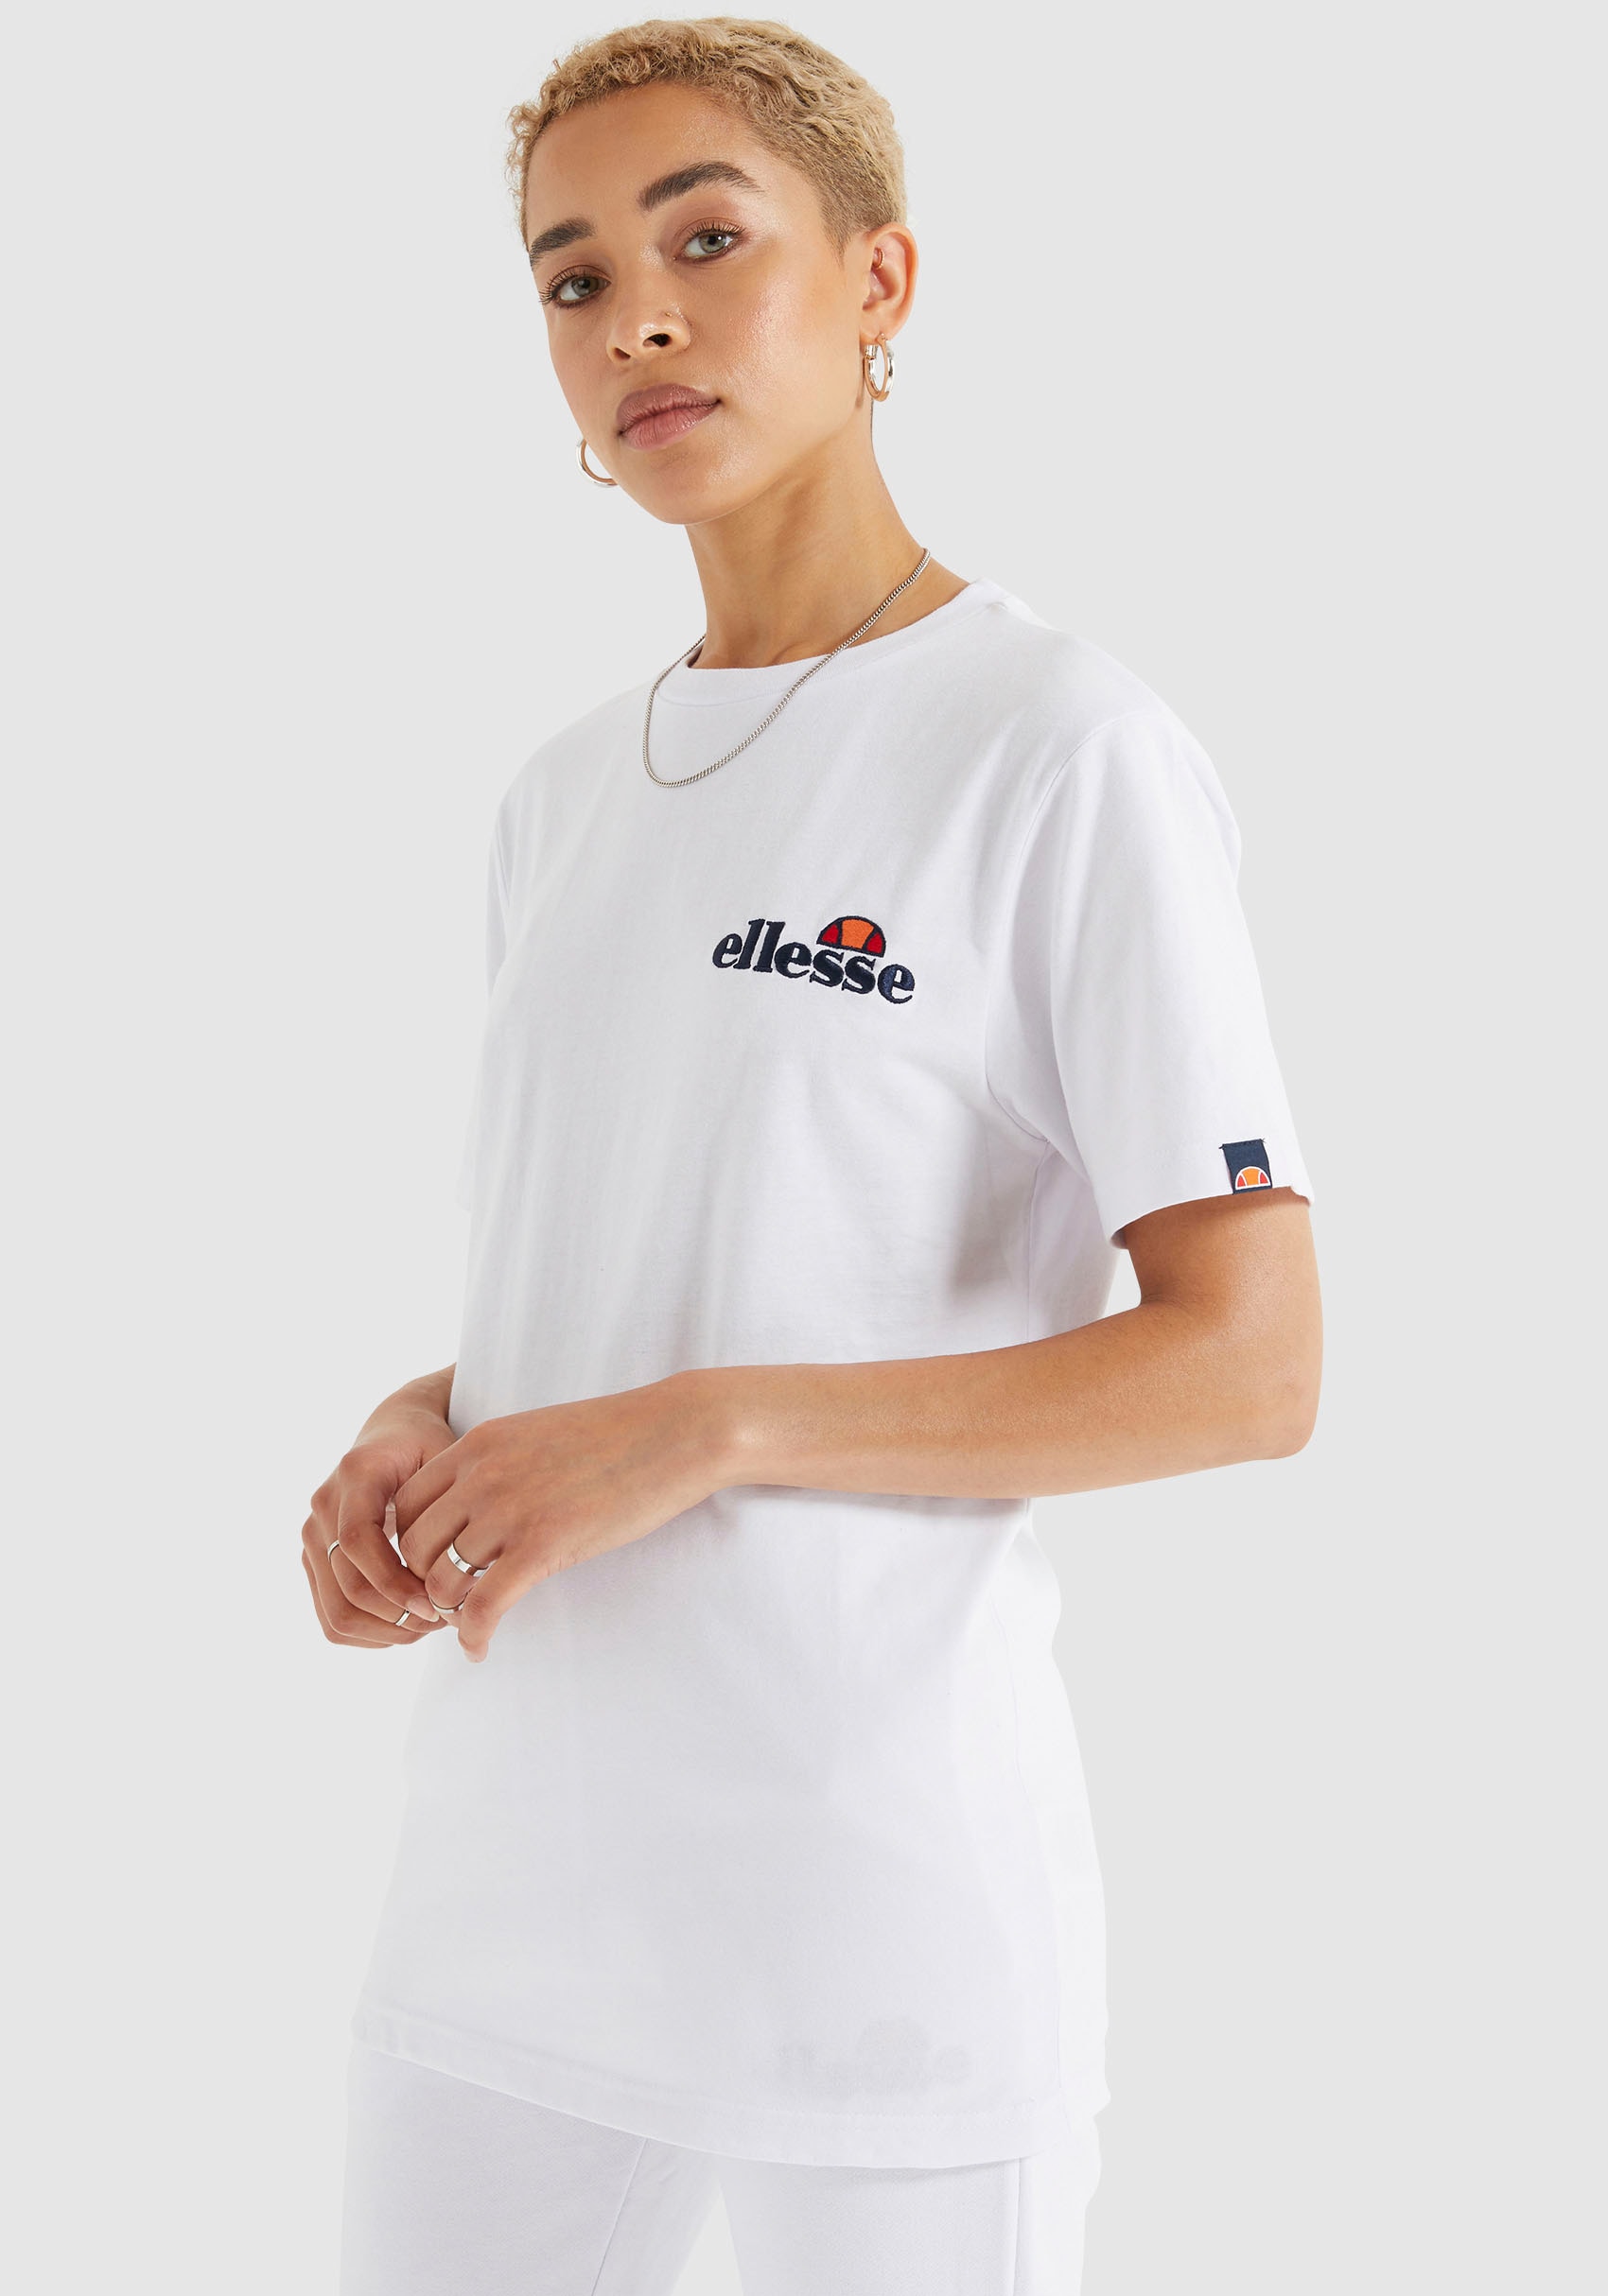 Ellesse T-Shirt »Kittin Tee« im OTTO Online Shop